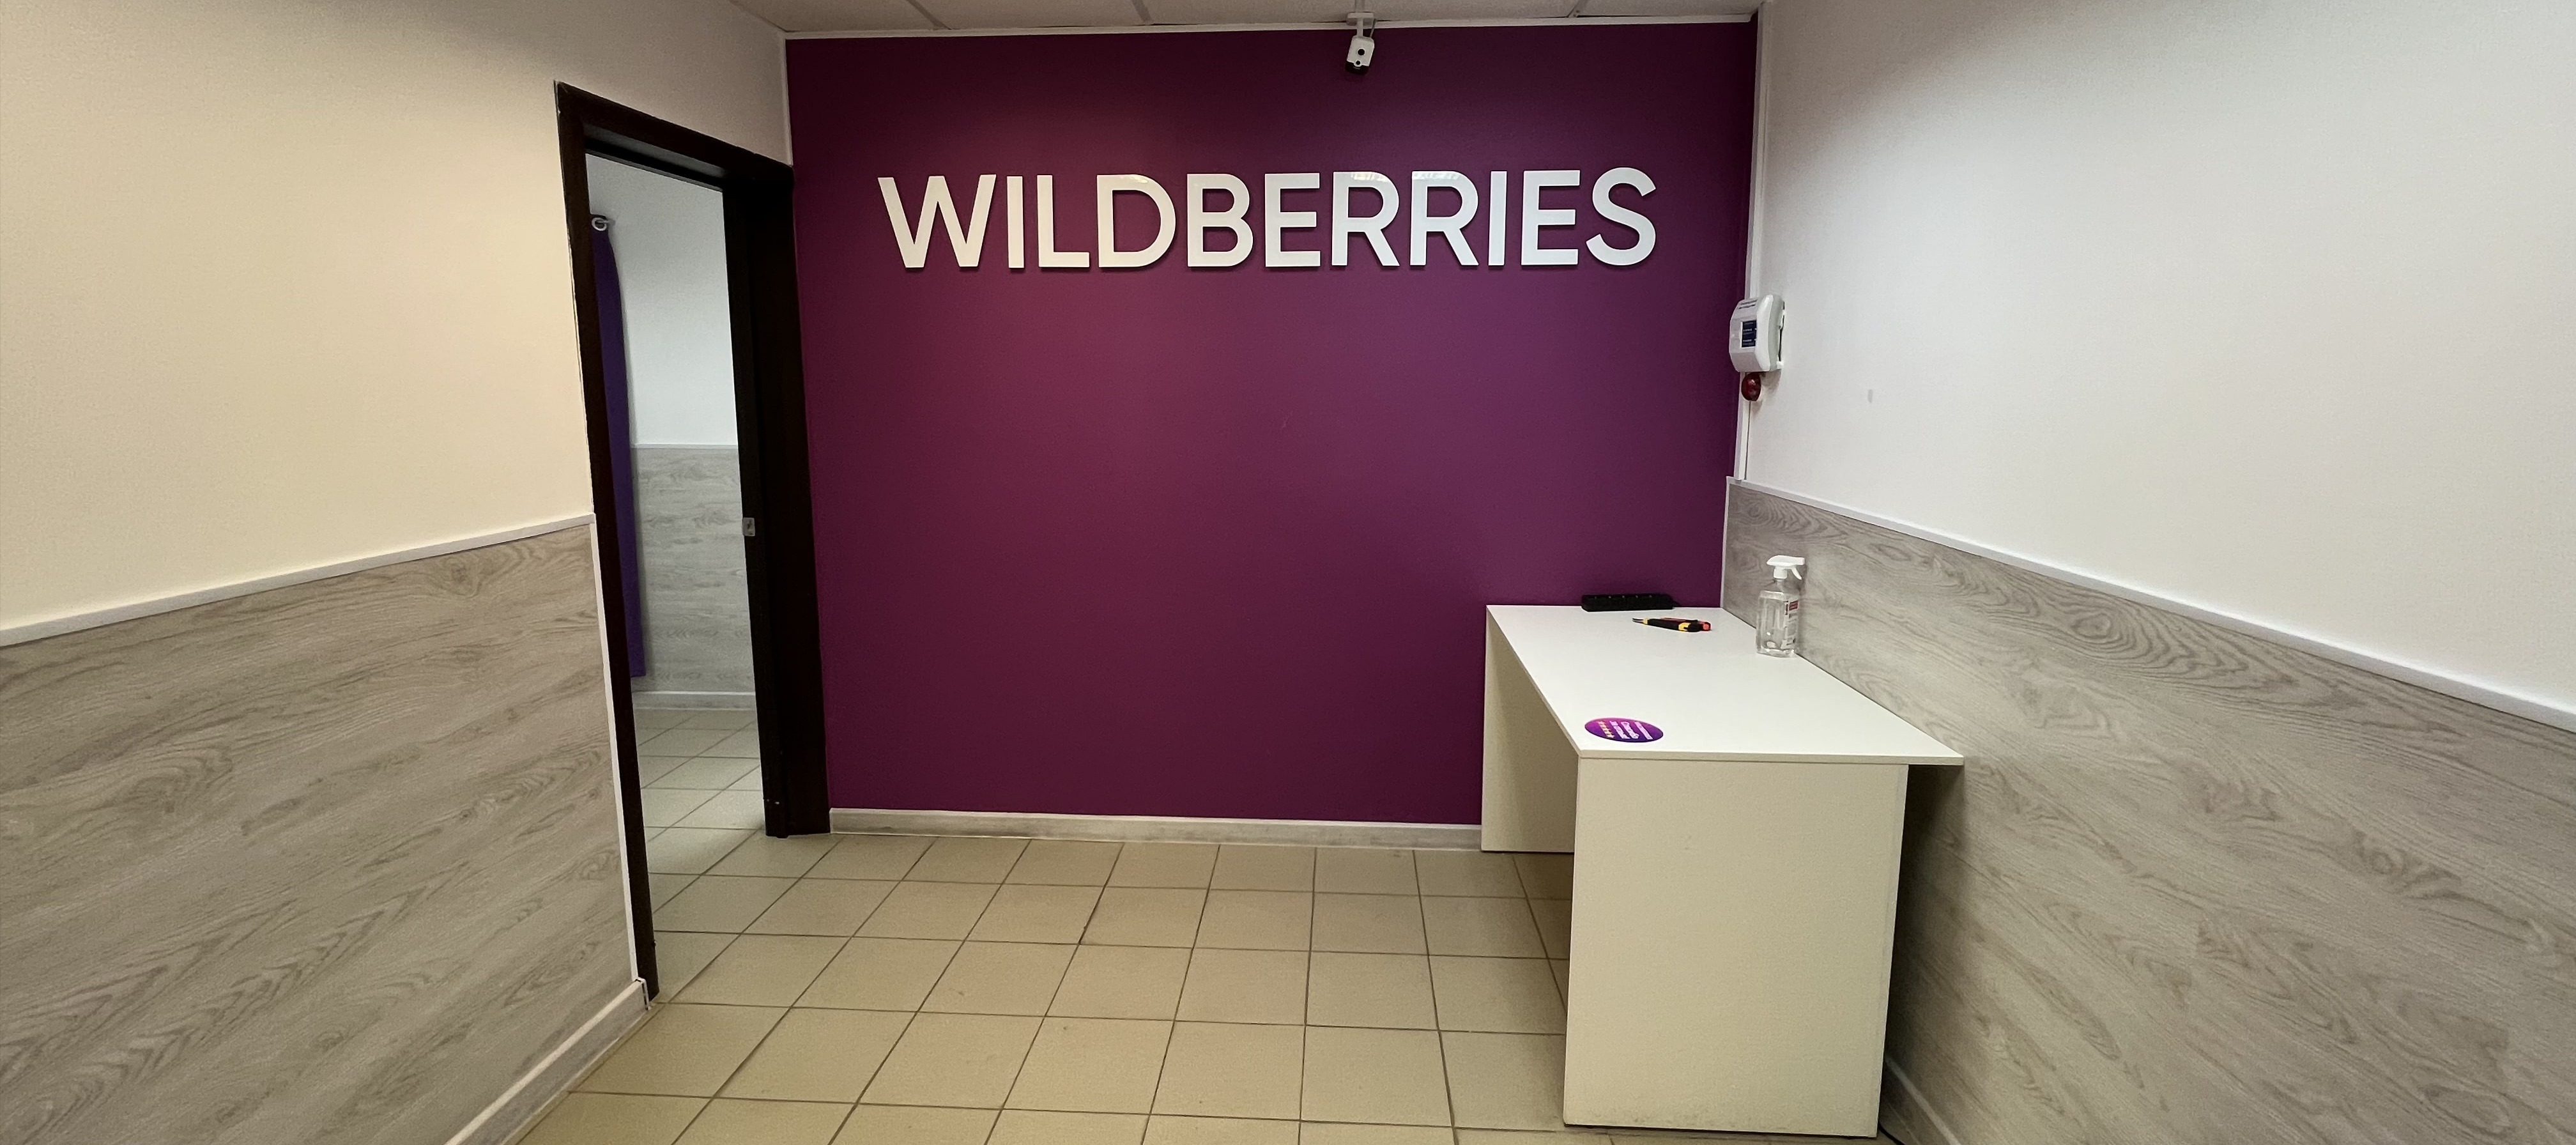 Фото новости: "Wildberries откроет логистический центр в Киргизии"